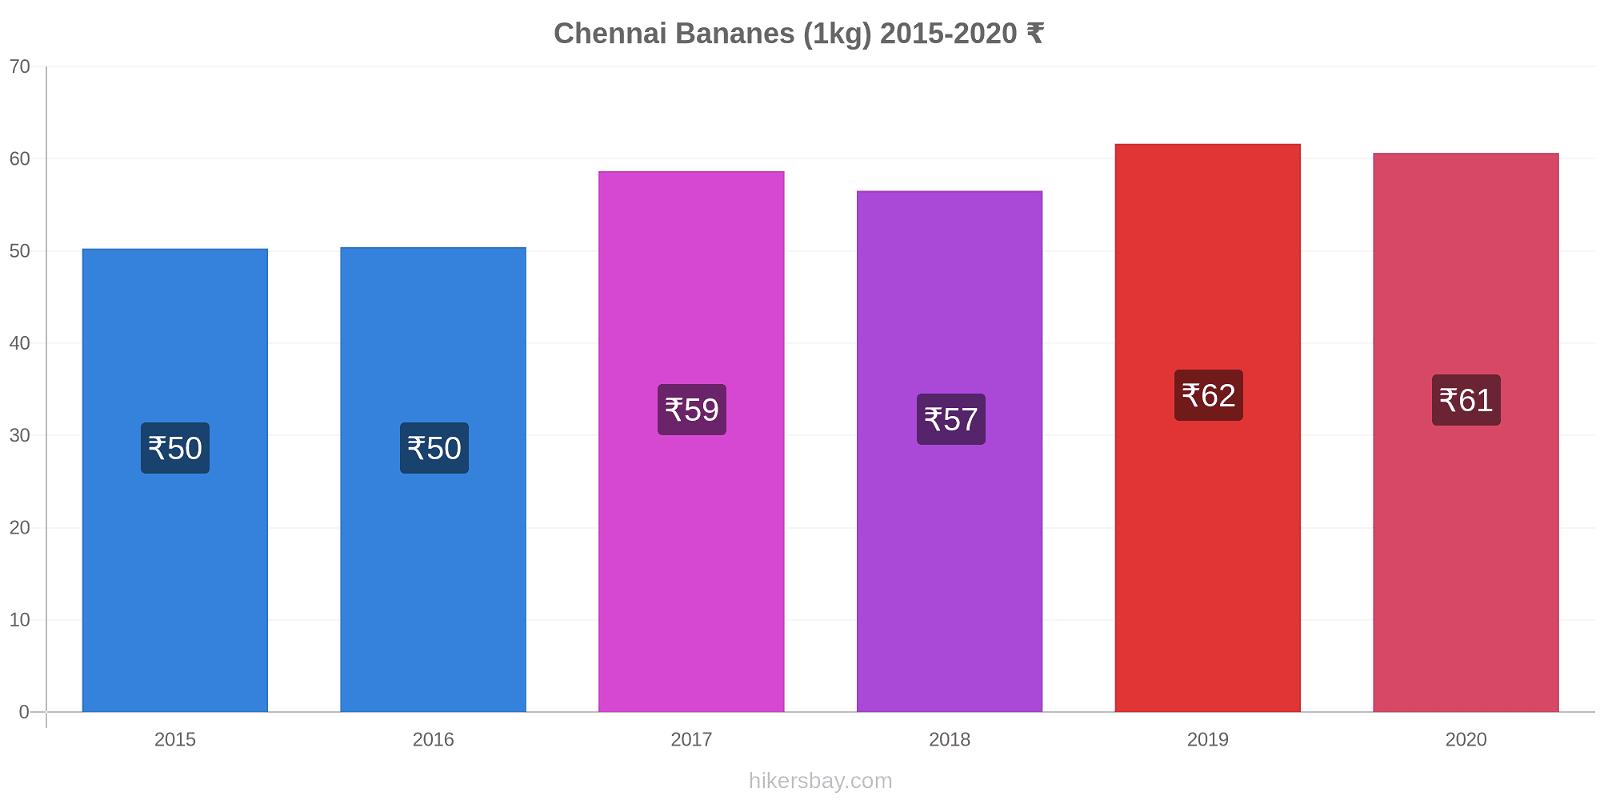 Chennai changements de prix Bananes (1kg) hikersbay.com